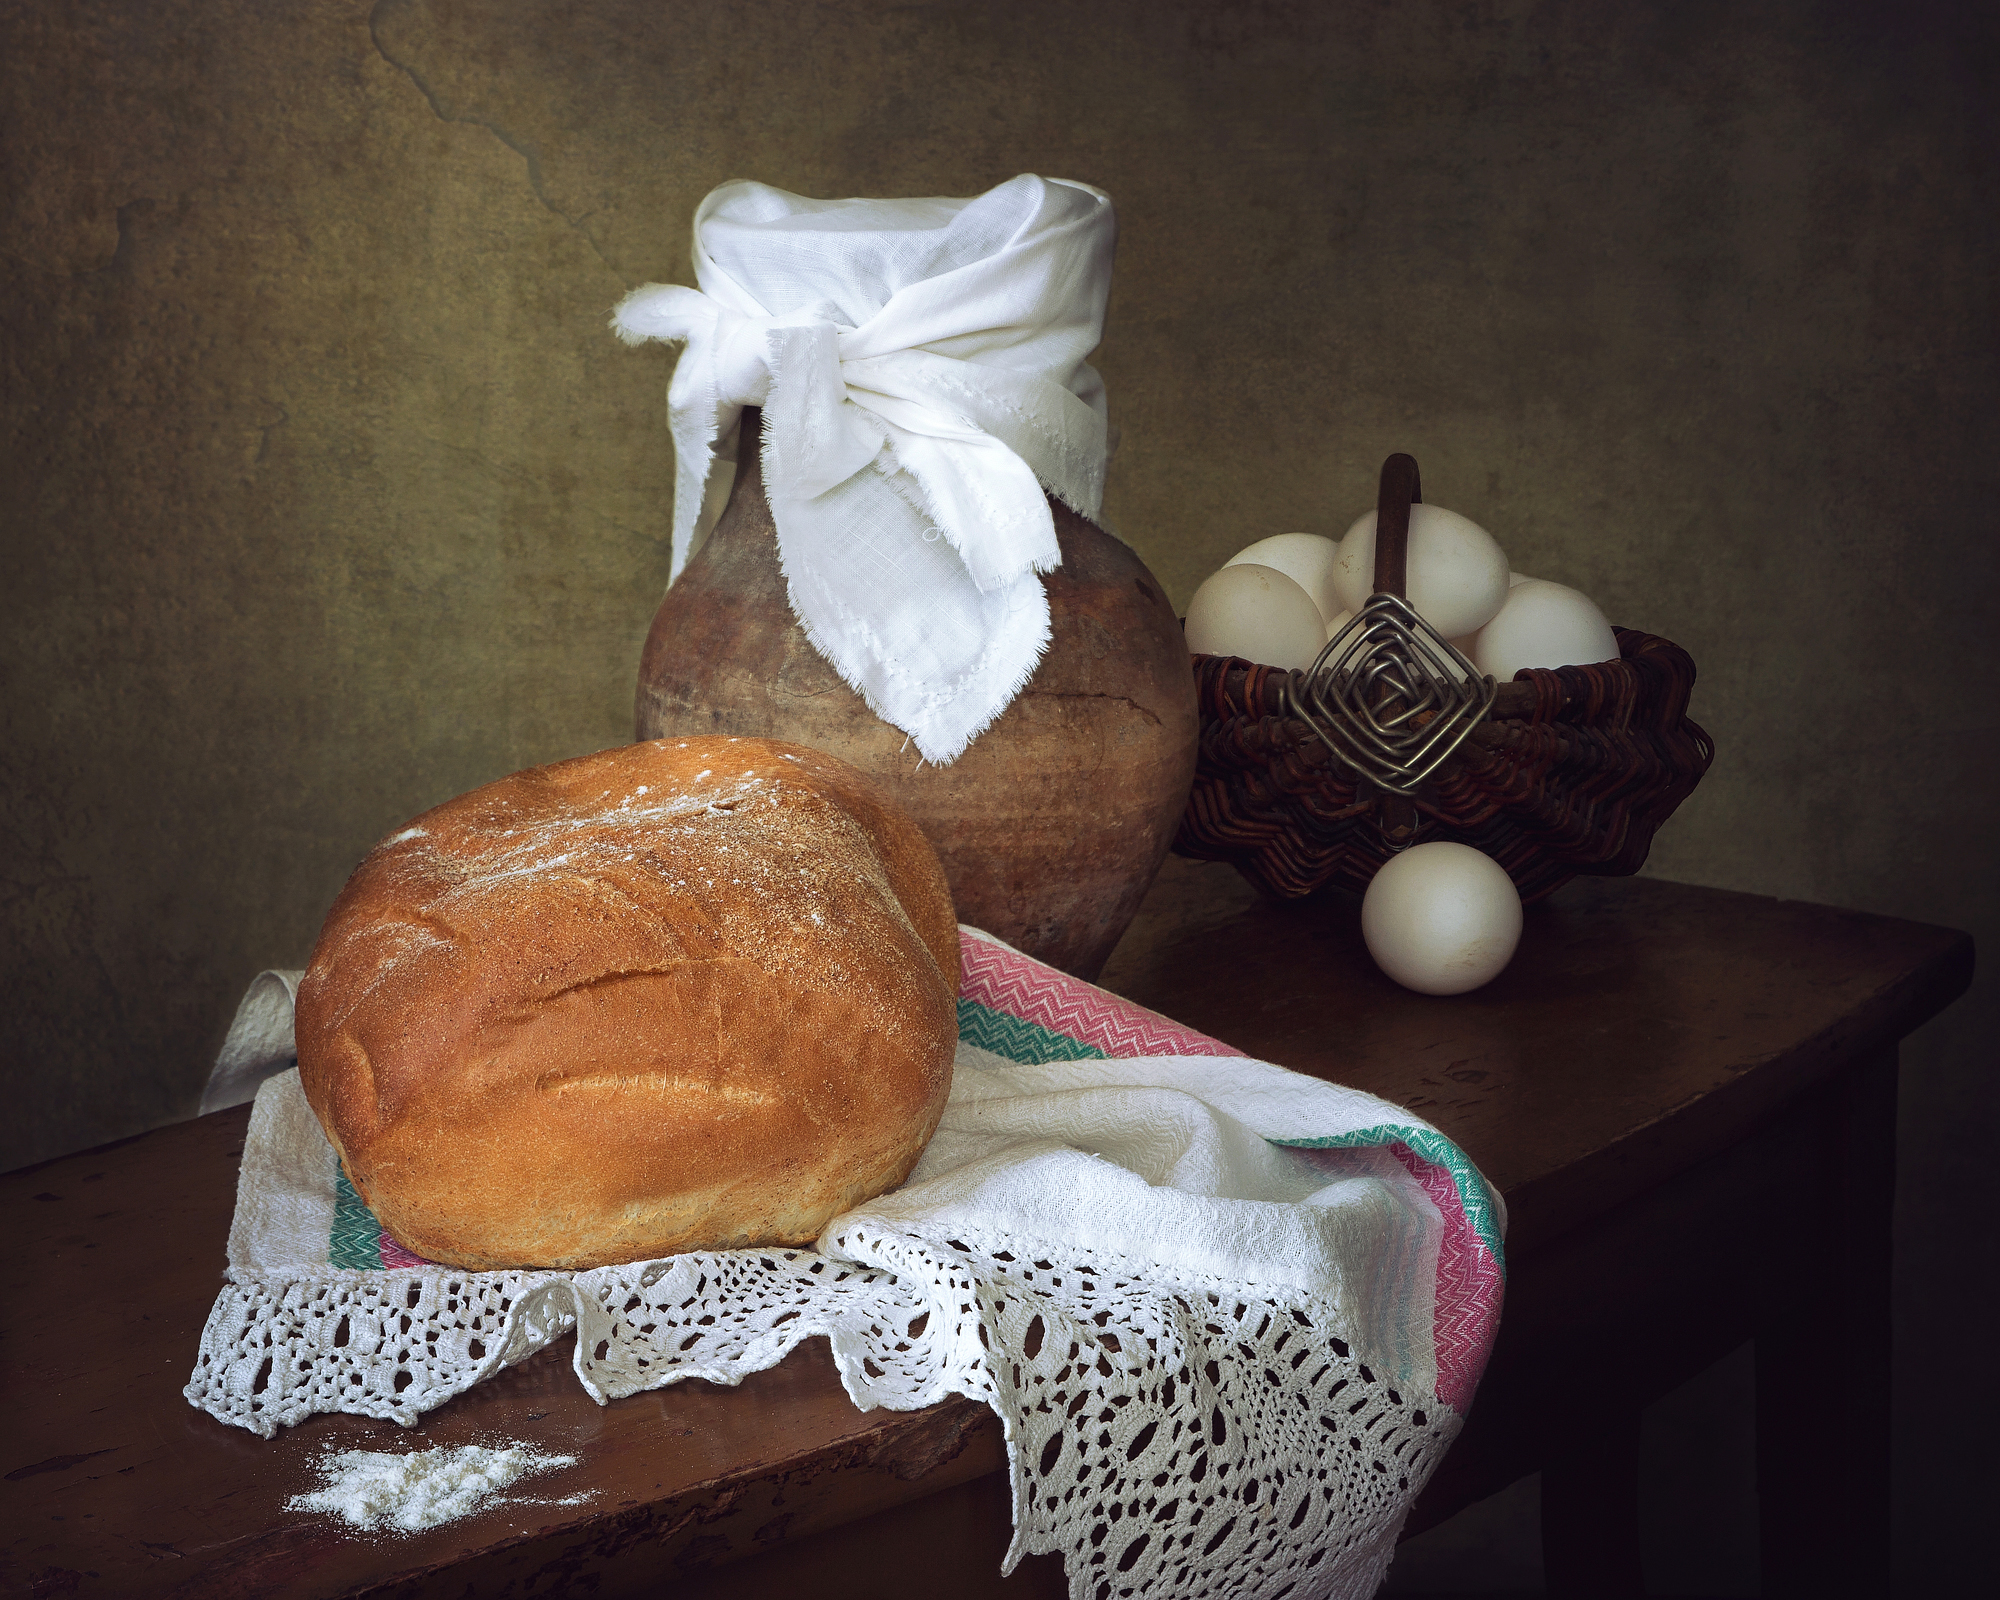 Полотенце хлеб. Натюрморт с хлебом. Хлеб на рушнике. Хлеб в живописи. Хлеб каравай.